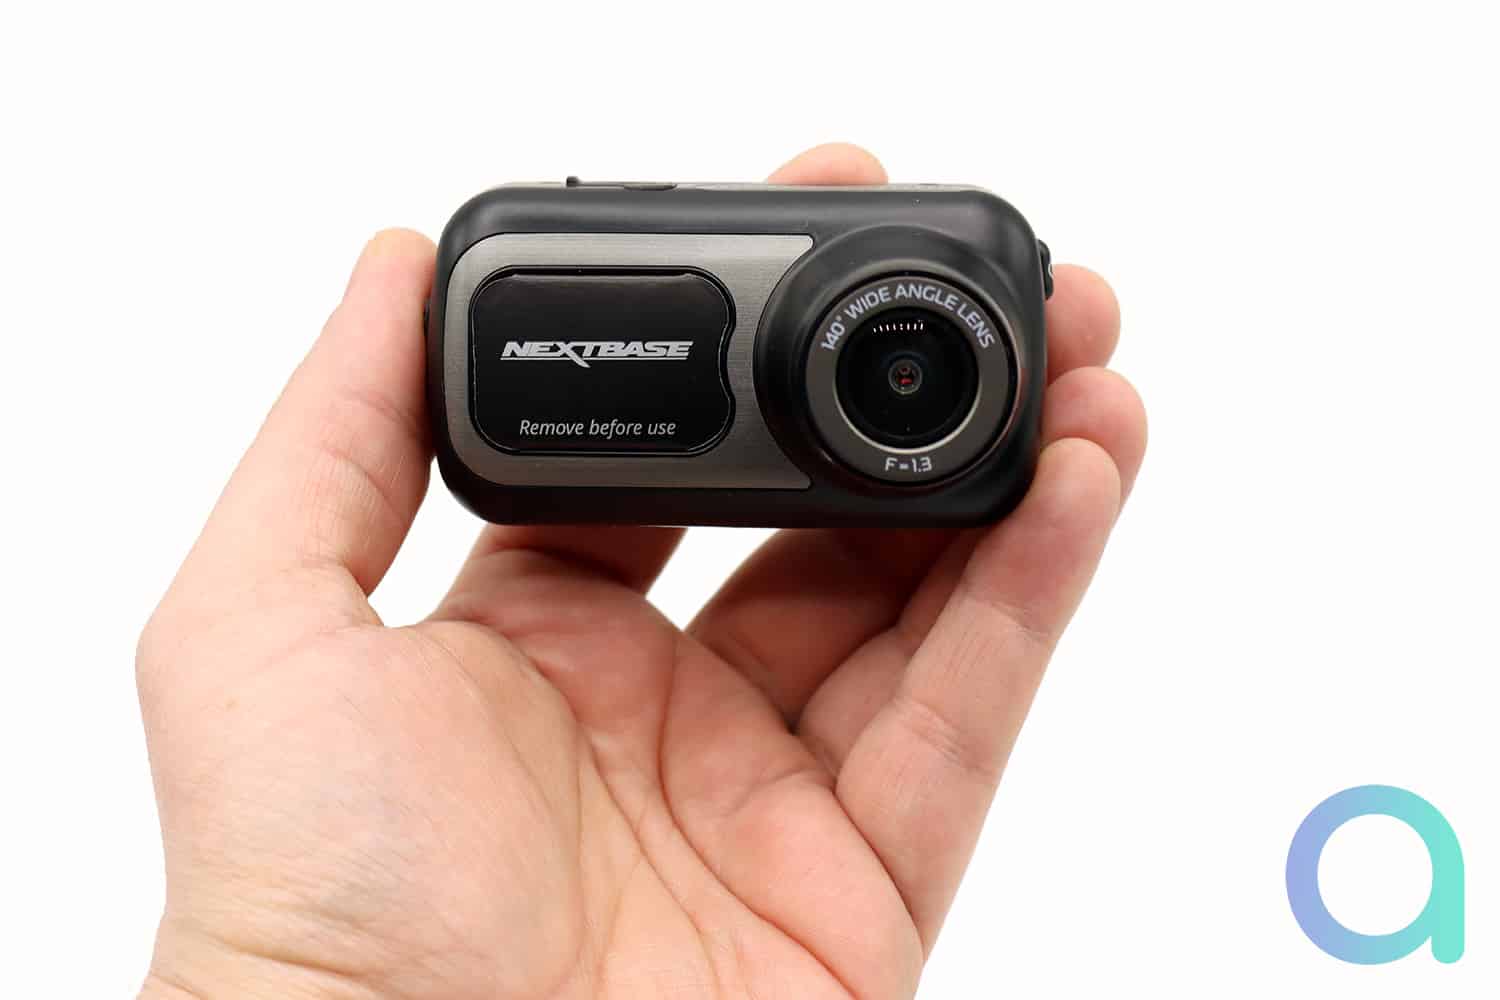 Camera embarquée sans fil Bluetooth Next Base 422 GW Noir - Vidéo